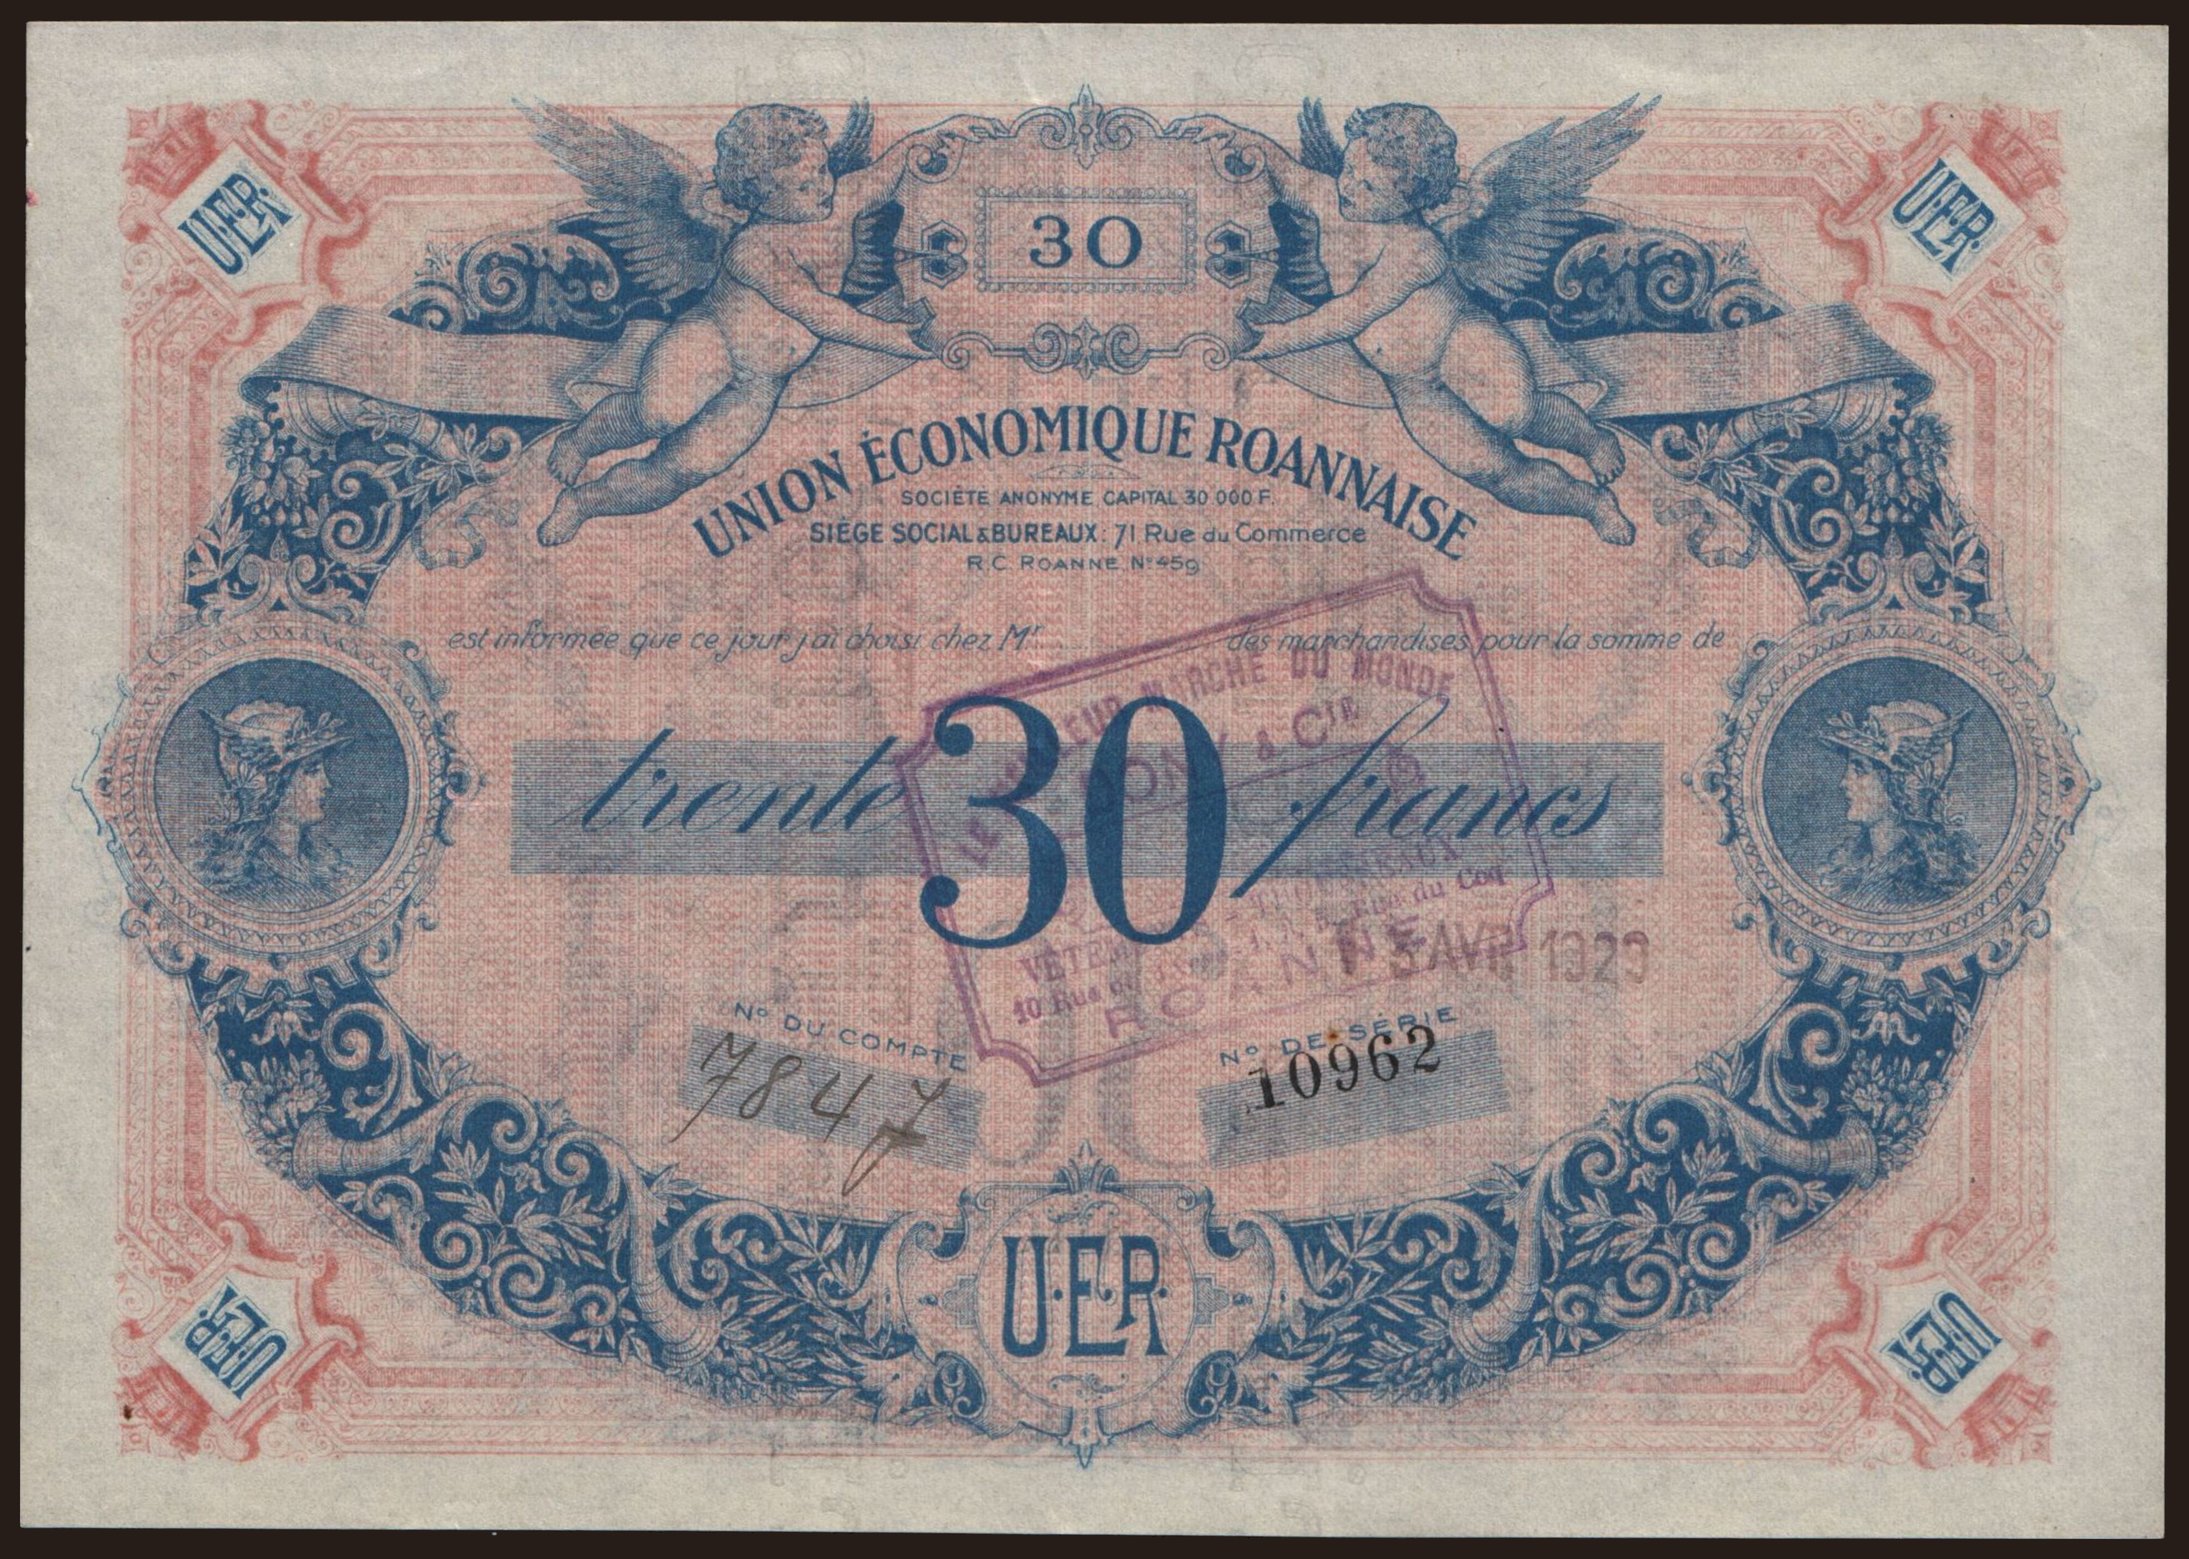 Roanne, 30 francs, 1929